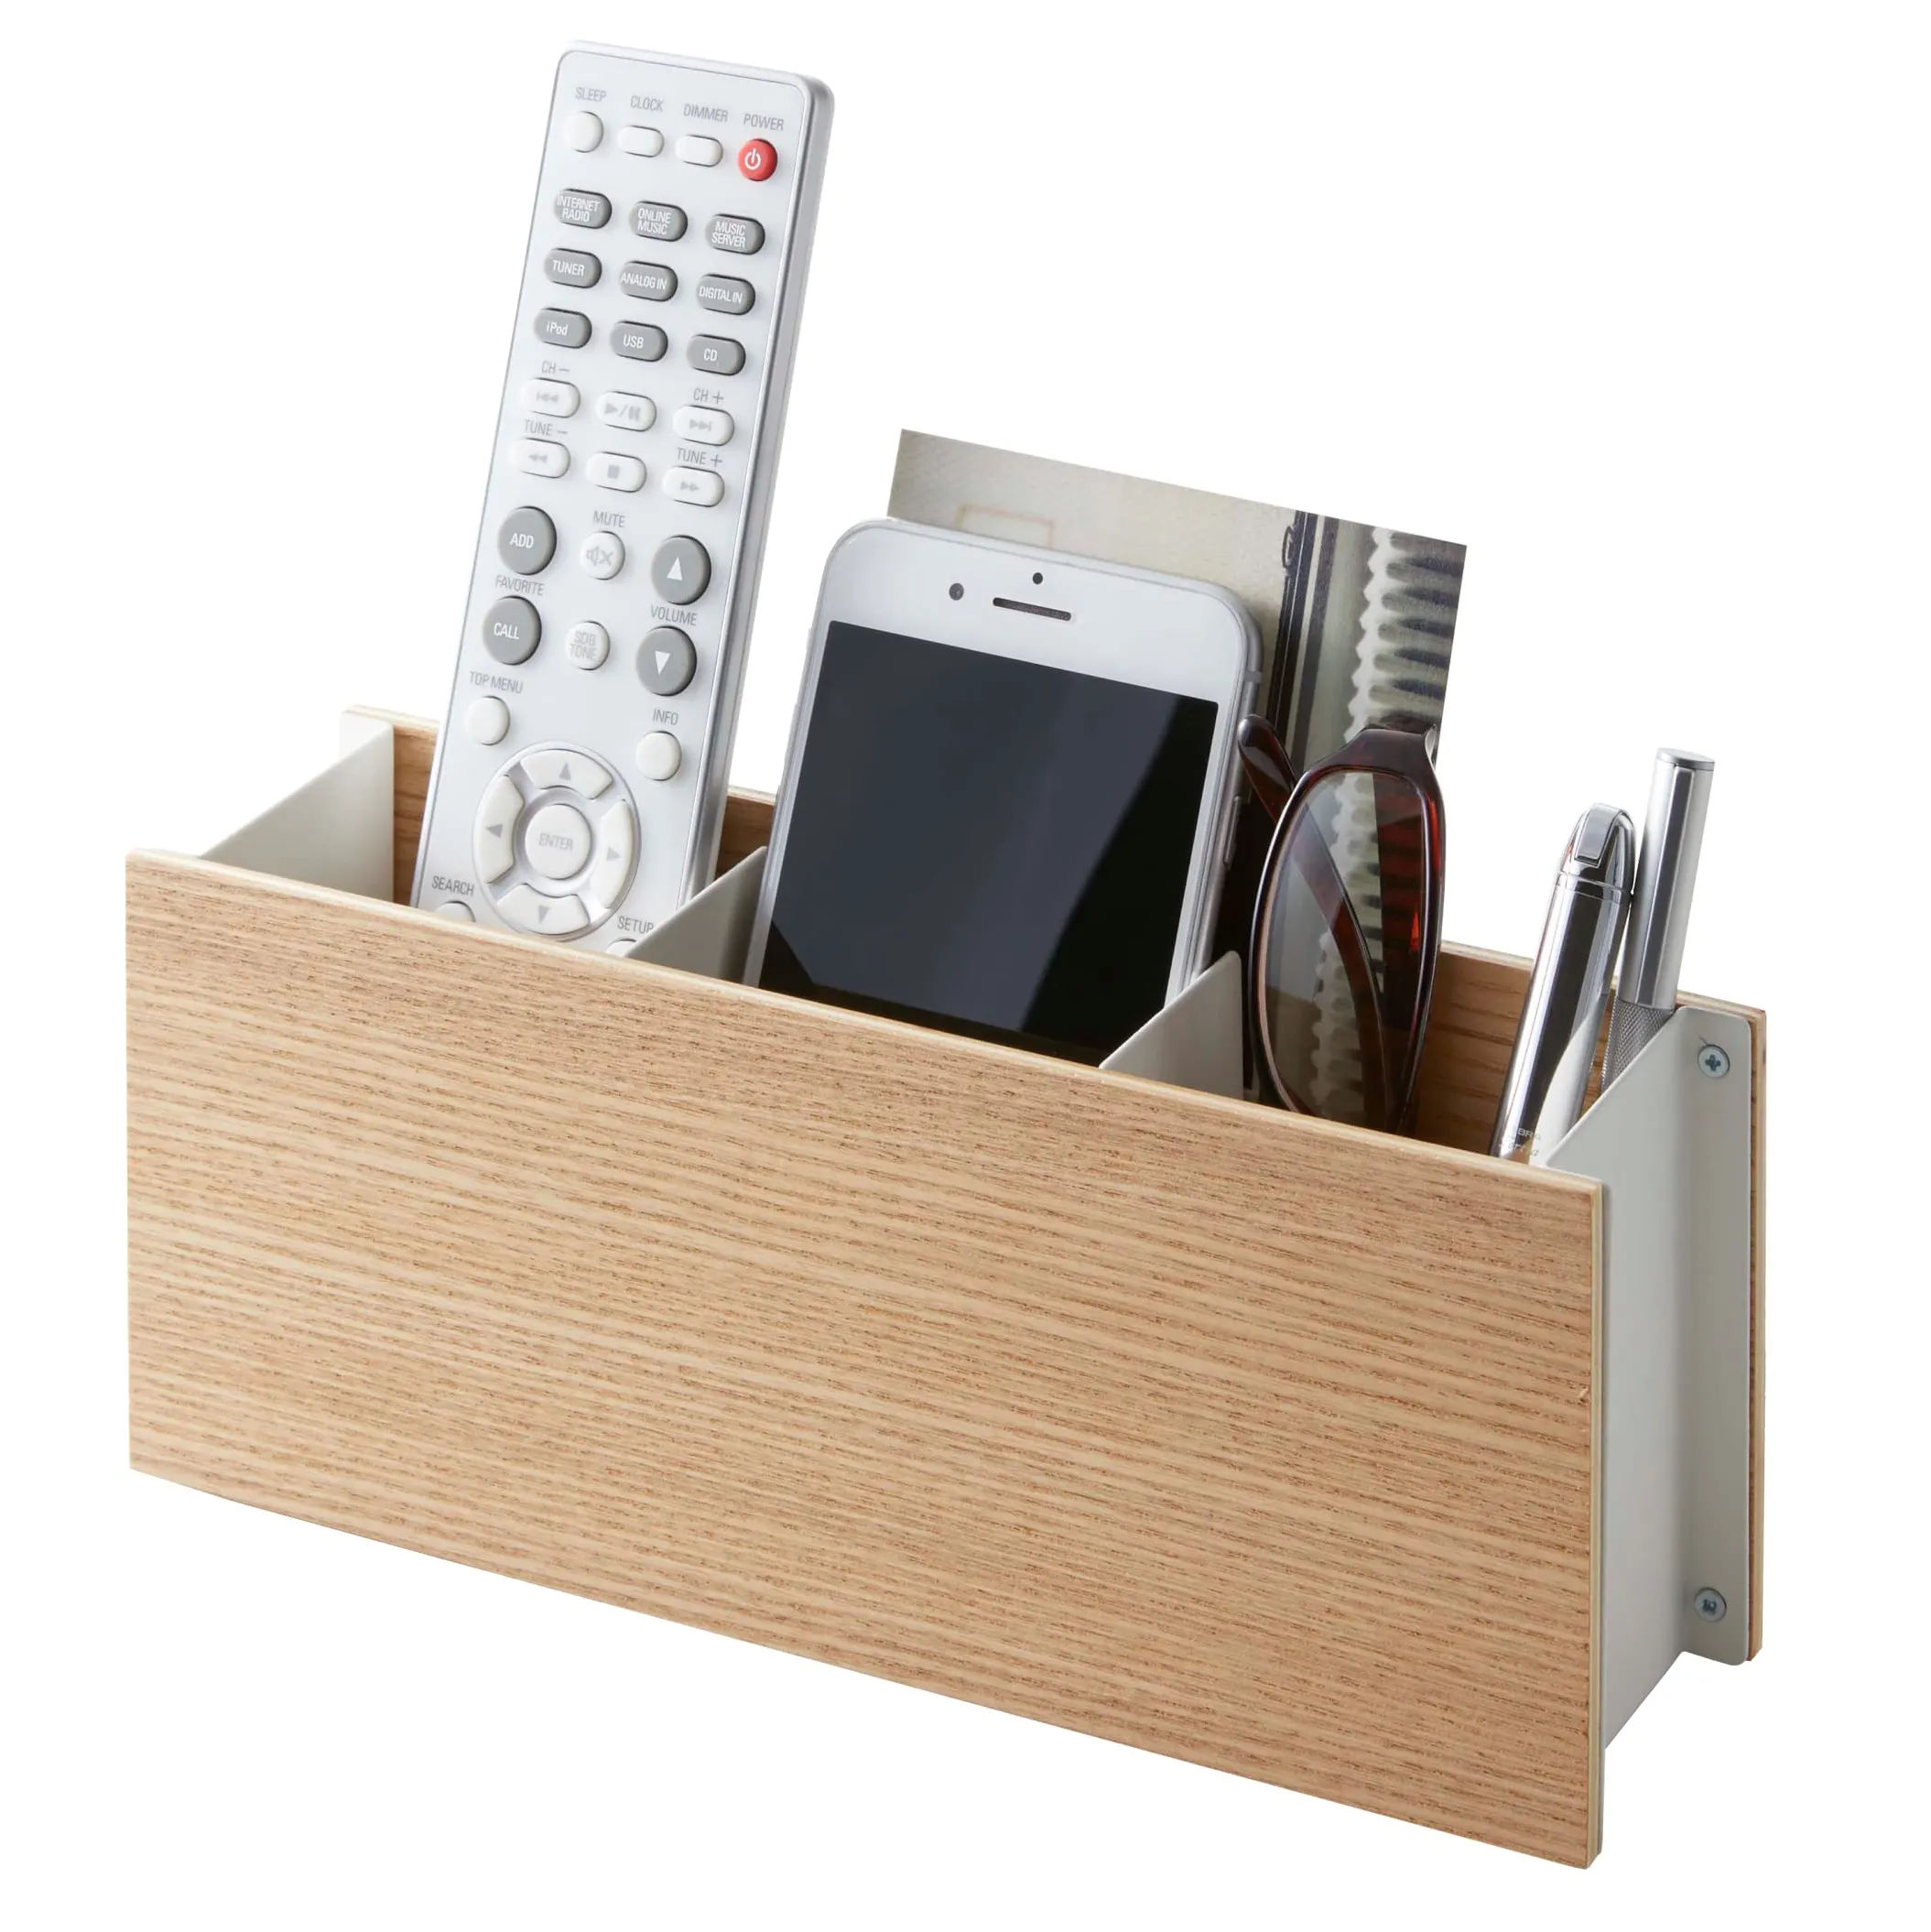 Home Desk Beige Wood Tv Remote Control And Pen Holder Stand Caddy Storage Organizer